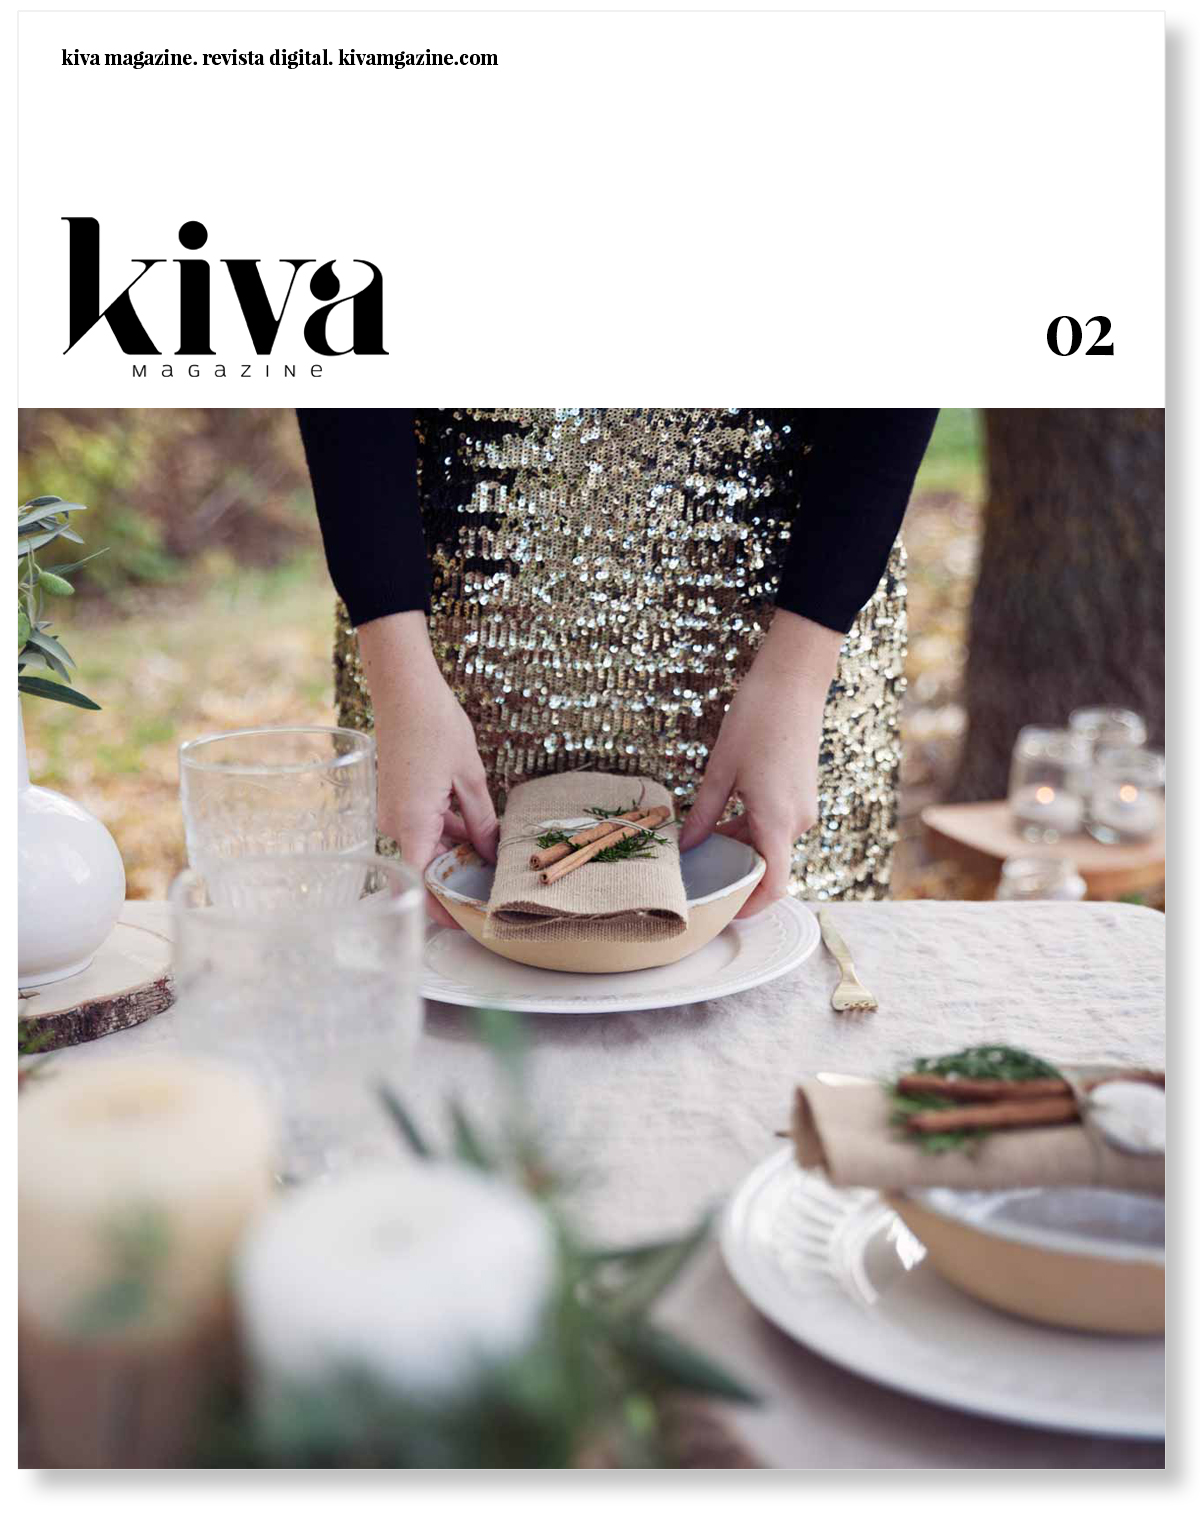 Segundo número Kiva magazine